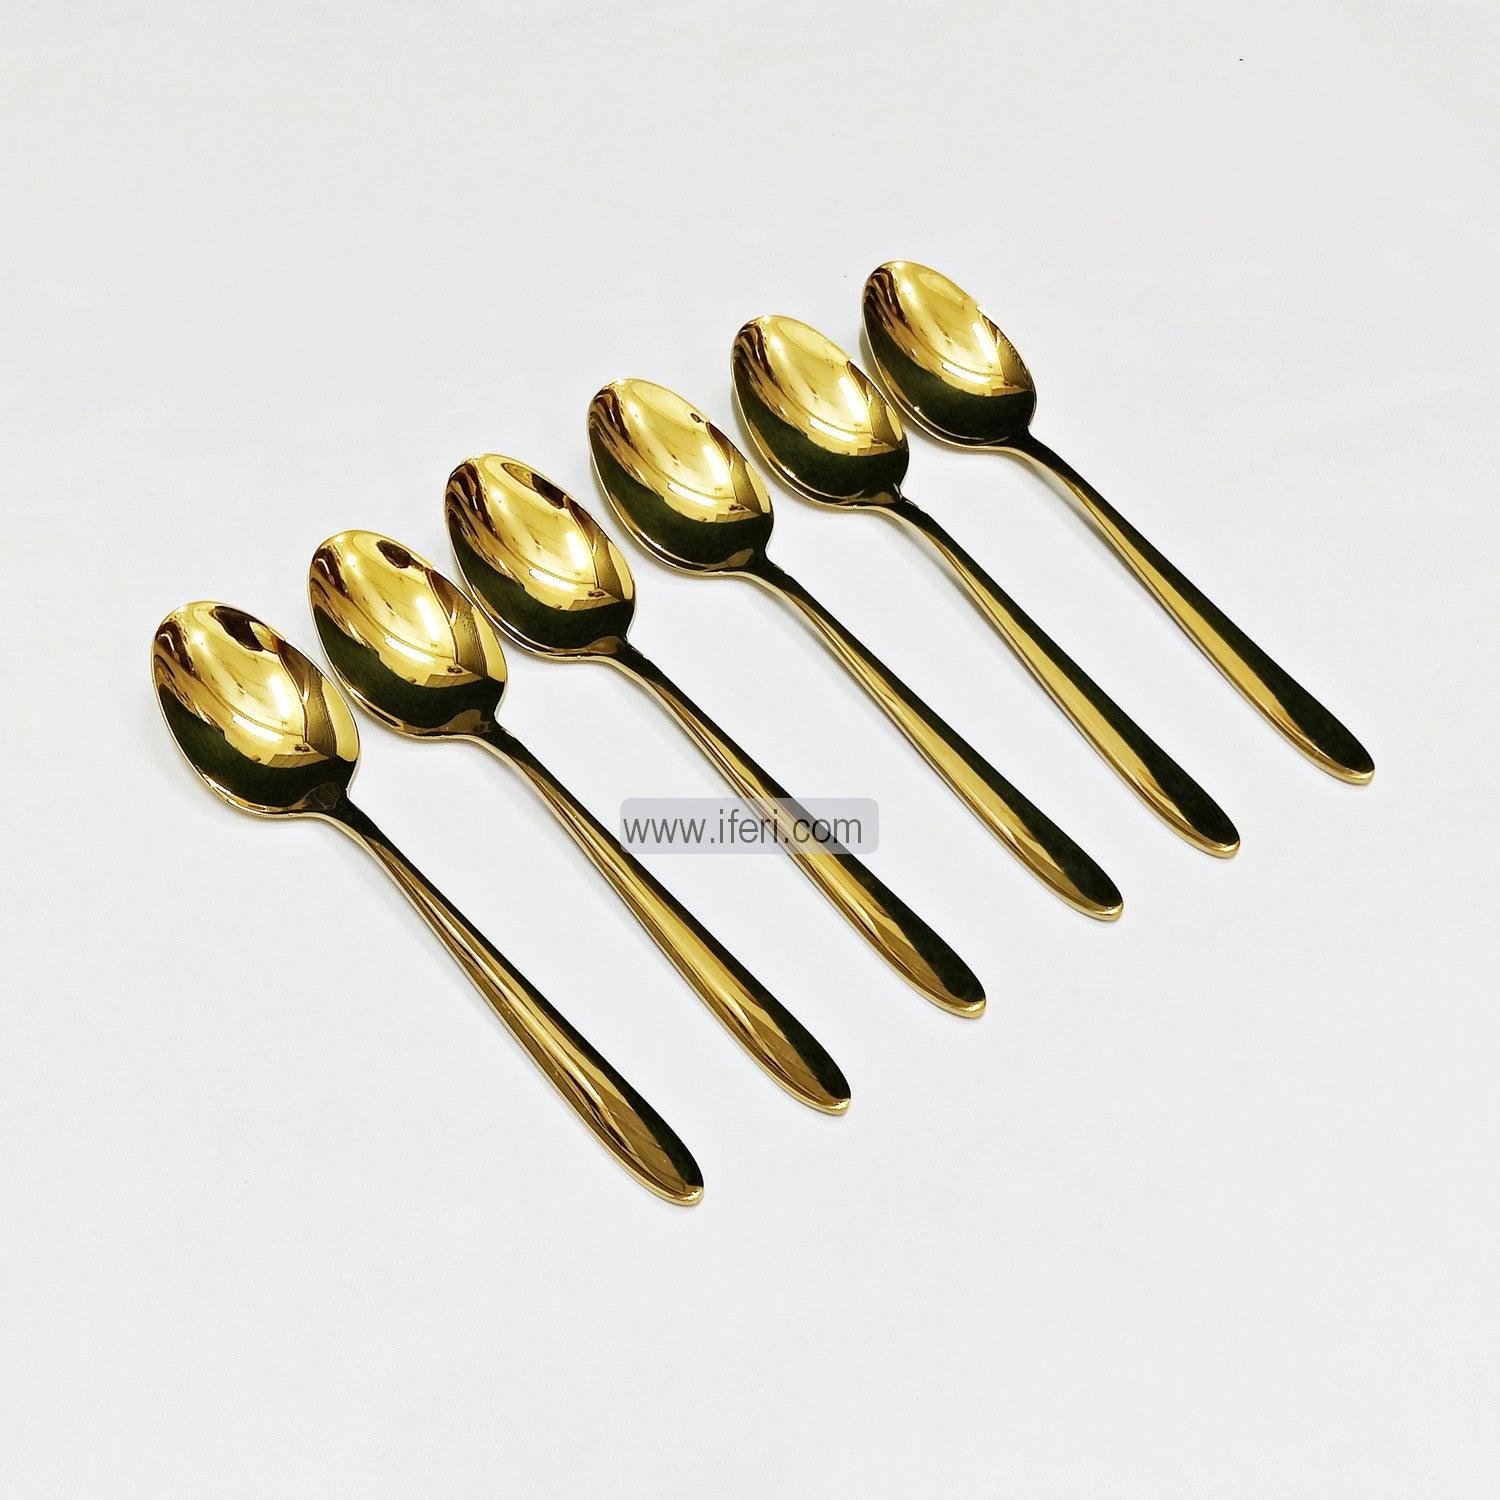 6 Pcs 8 inch Stainless Steel Golden Dinner Spoon Set EB9137 Price in Bangladesh - iferi.com